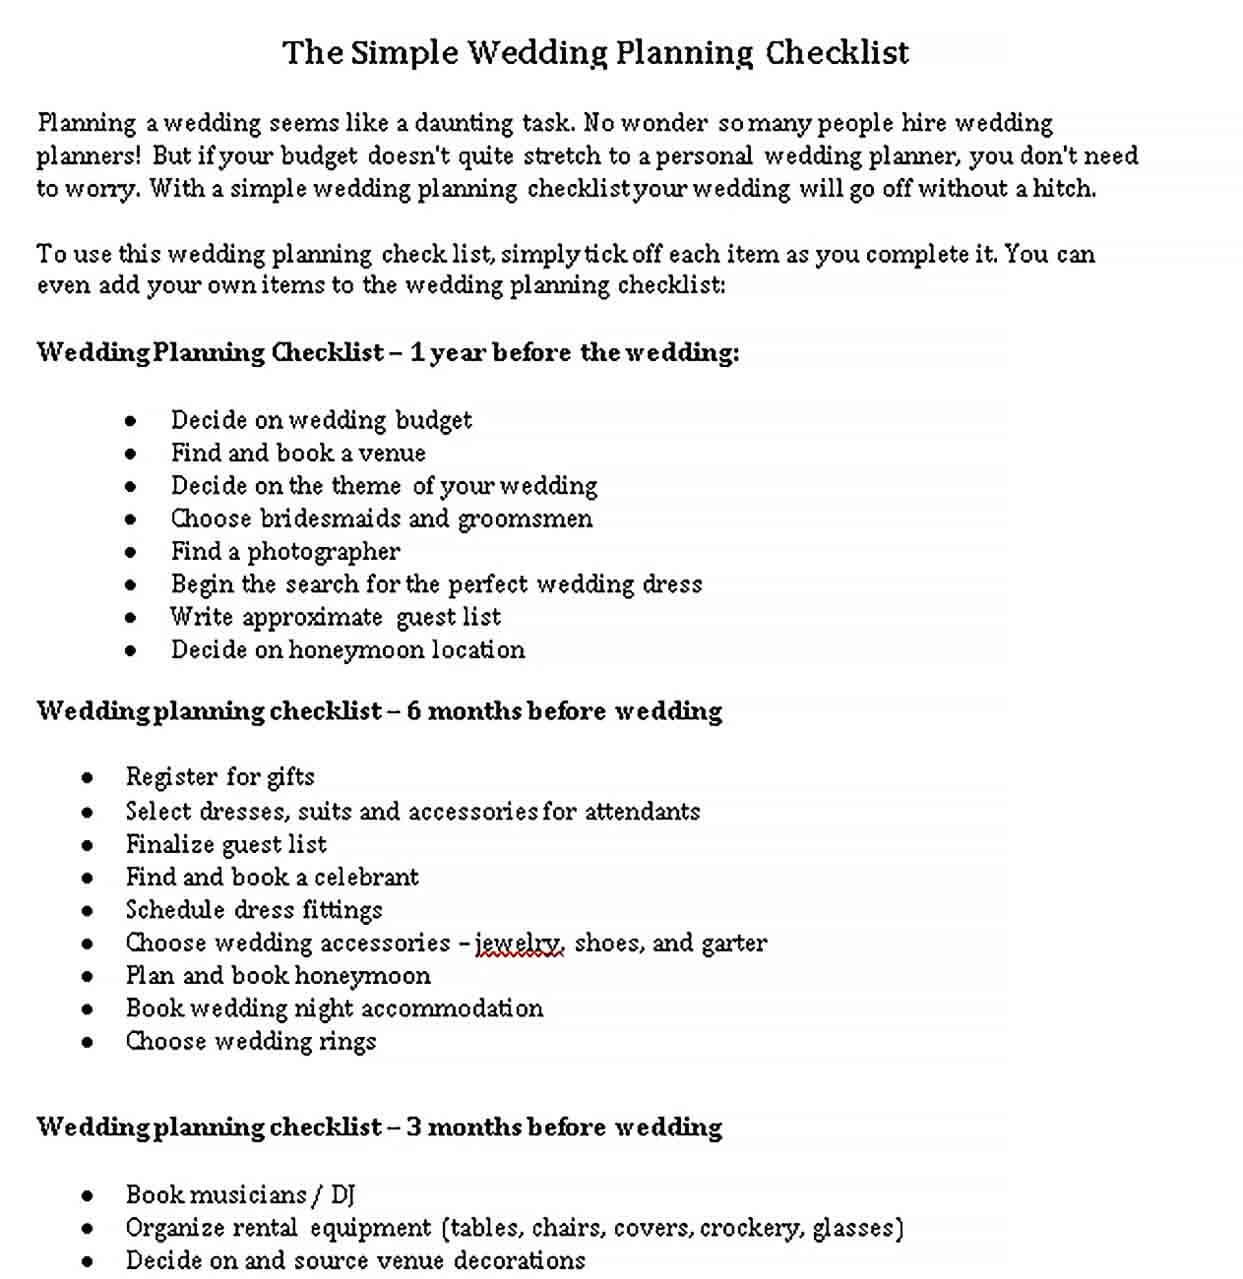 Sample Simple Wedding Planning Checklist